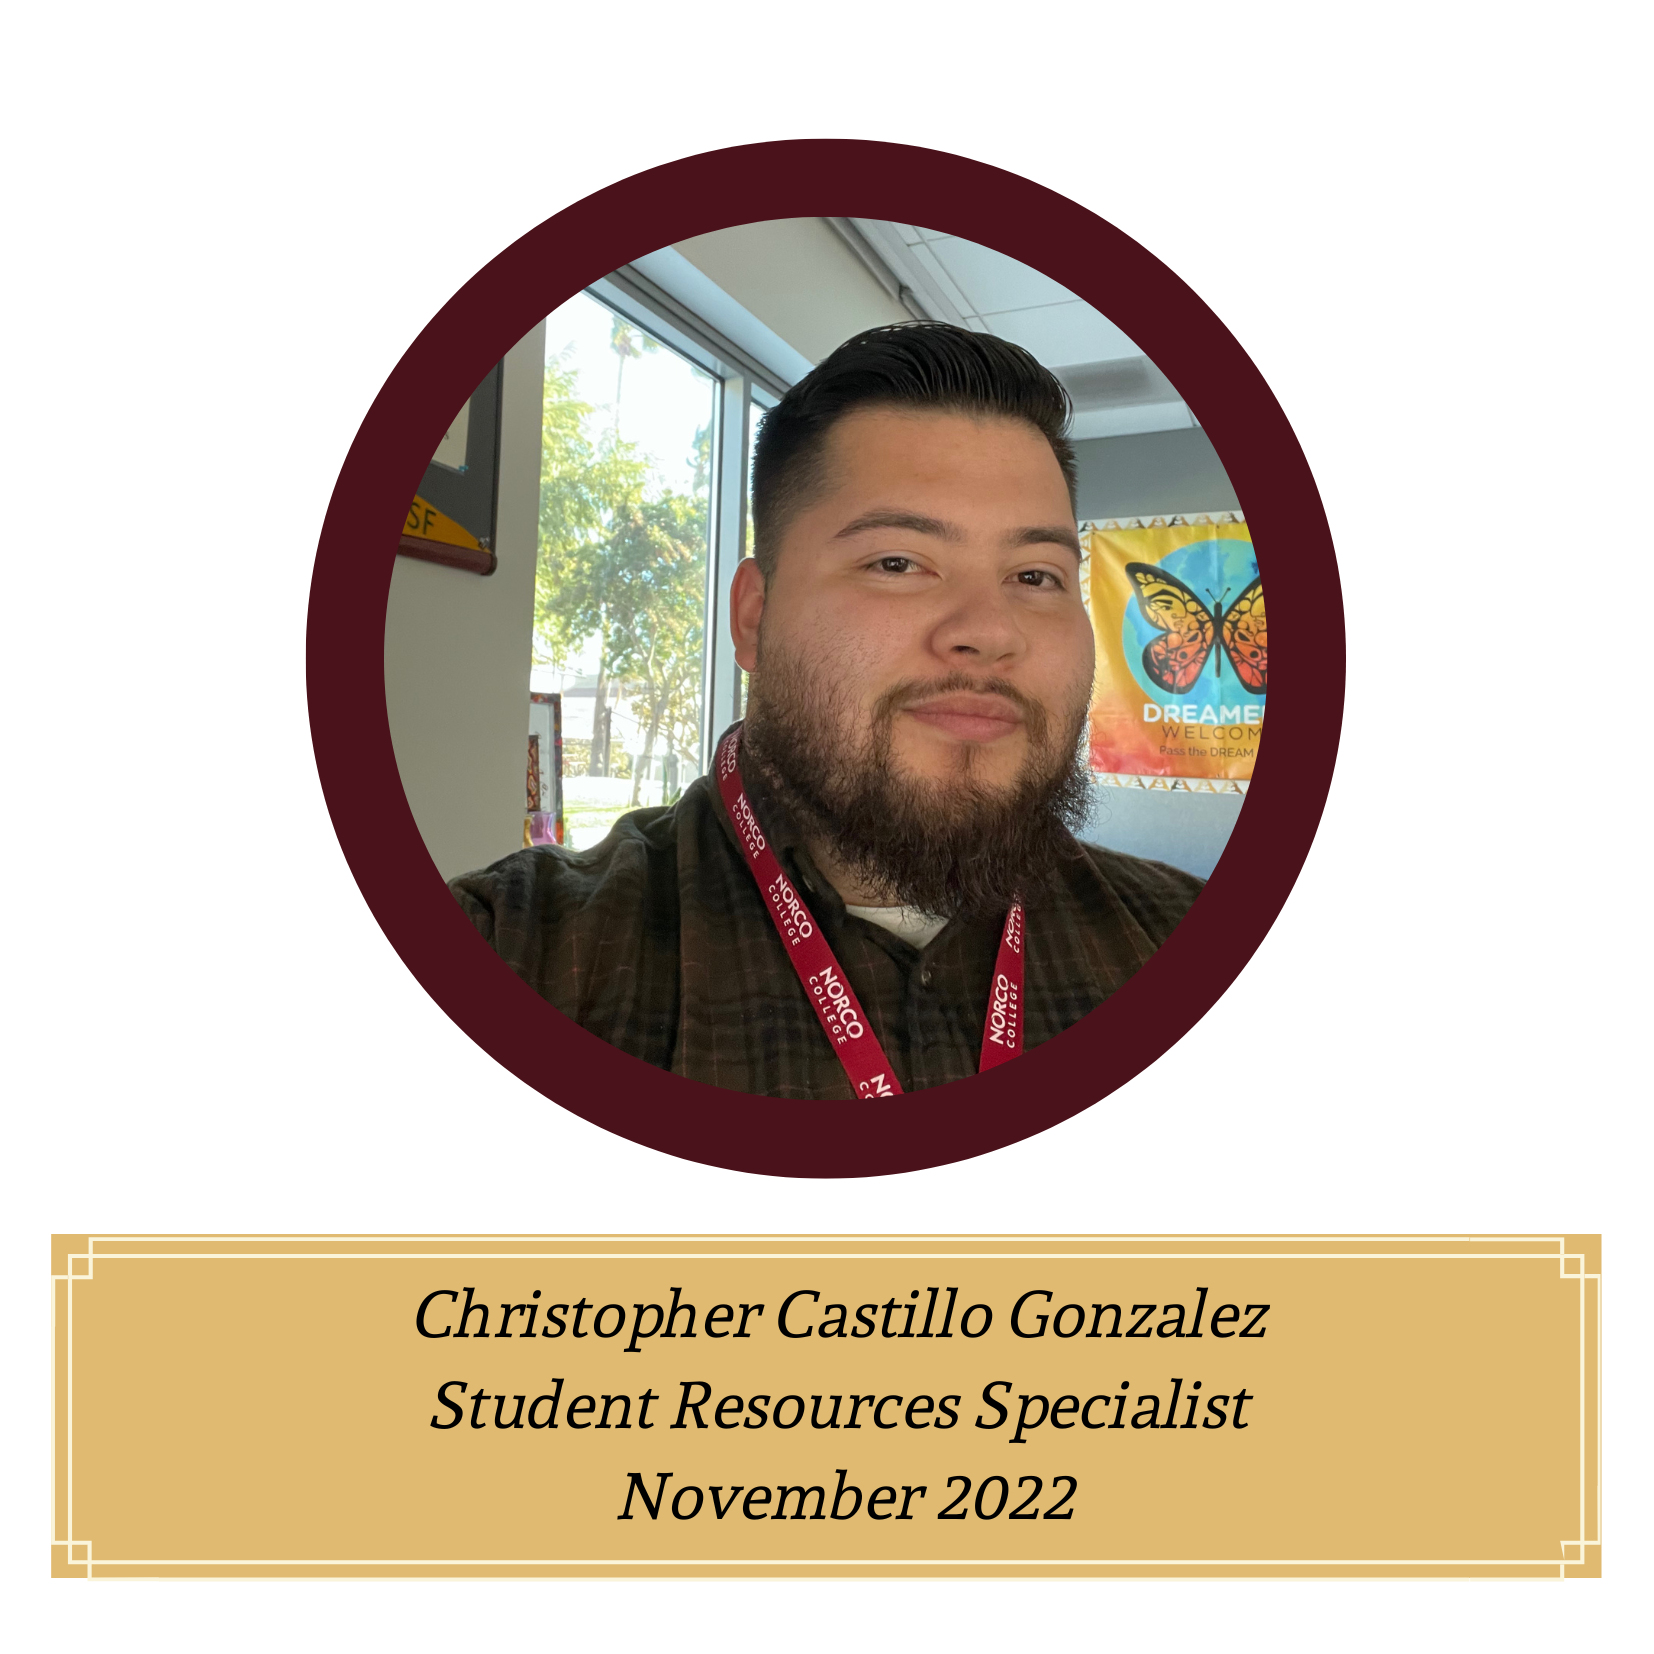 Christopher Castillo Gonzalez